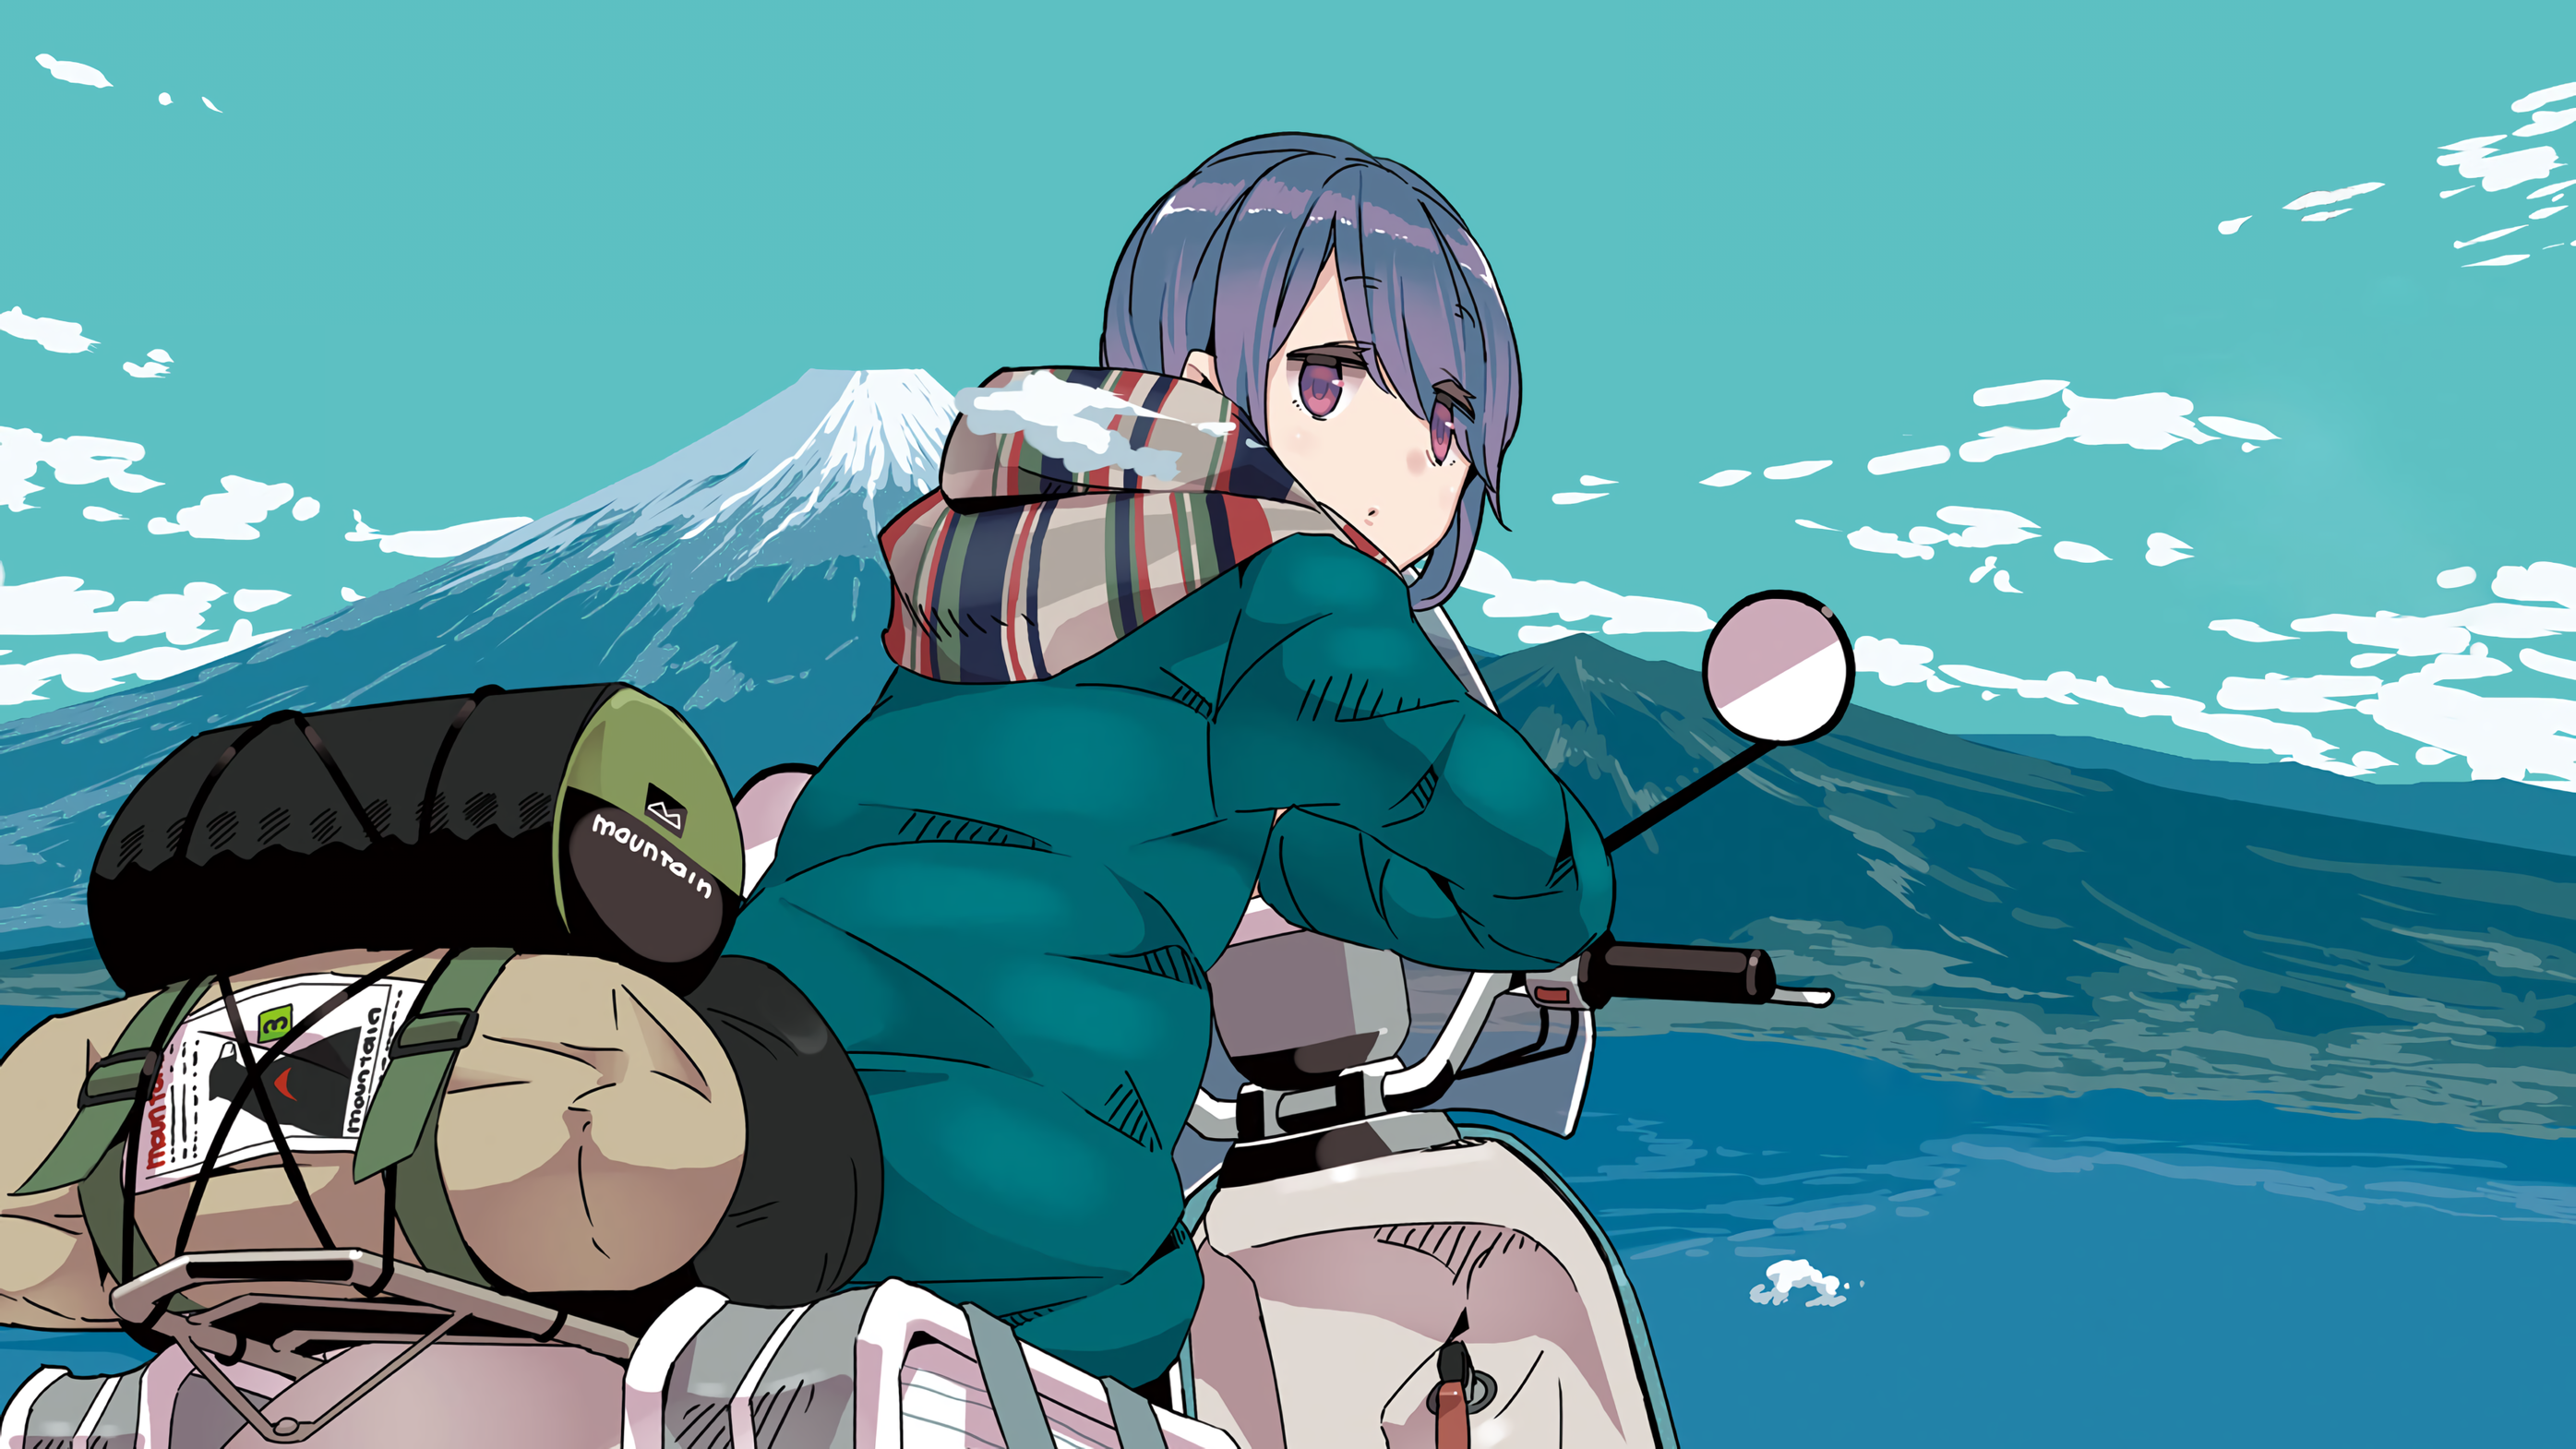 Anime 2791x1570 Rin Shima Yuru Camp scooters scarf luggage tent clouds anime anime girls